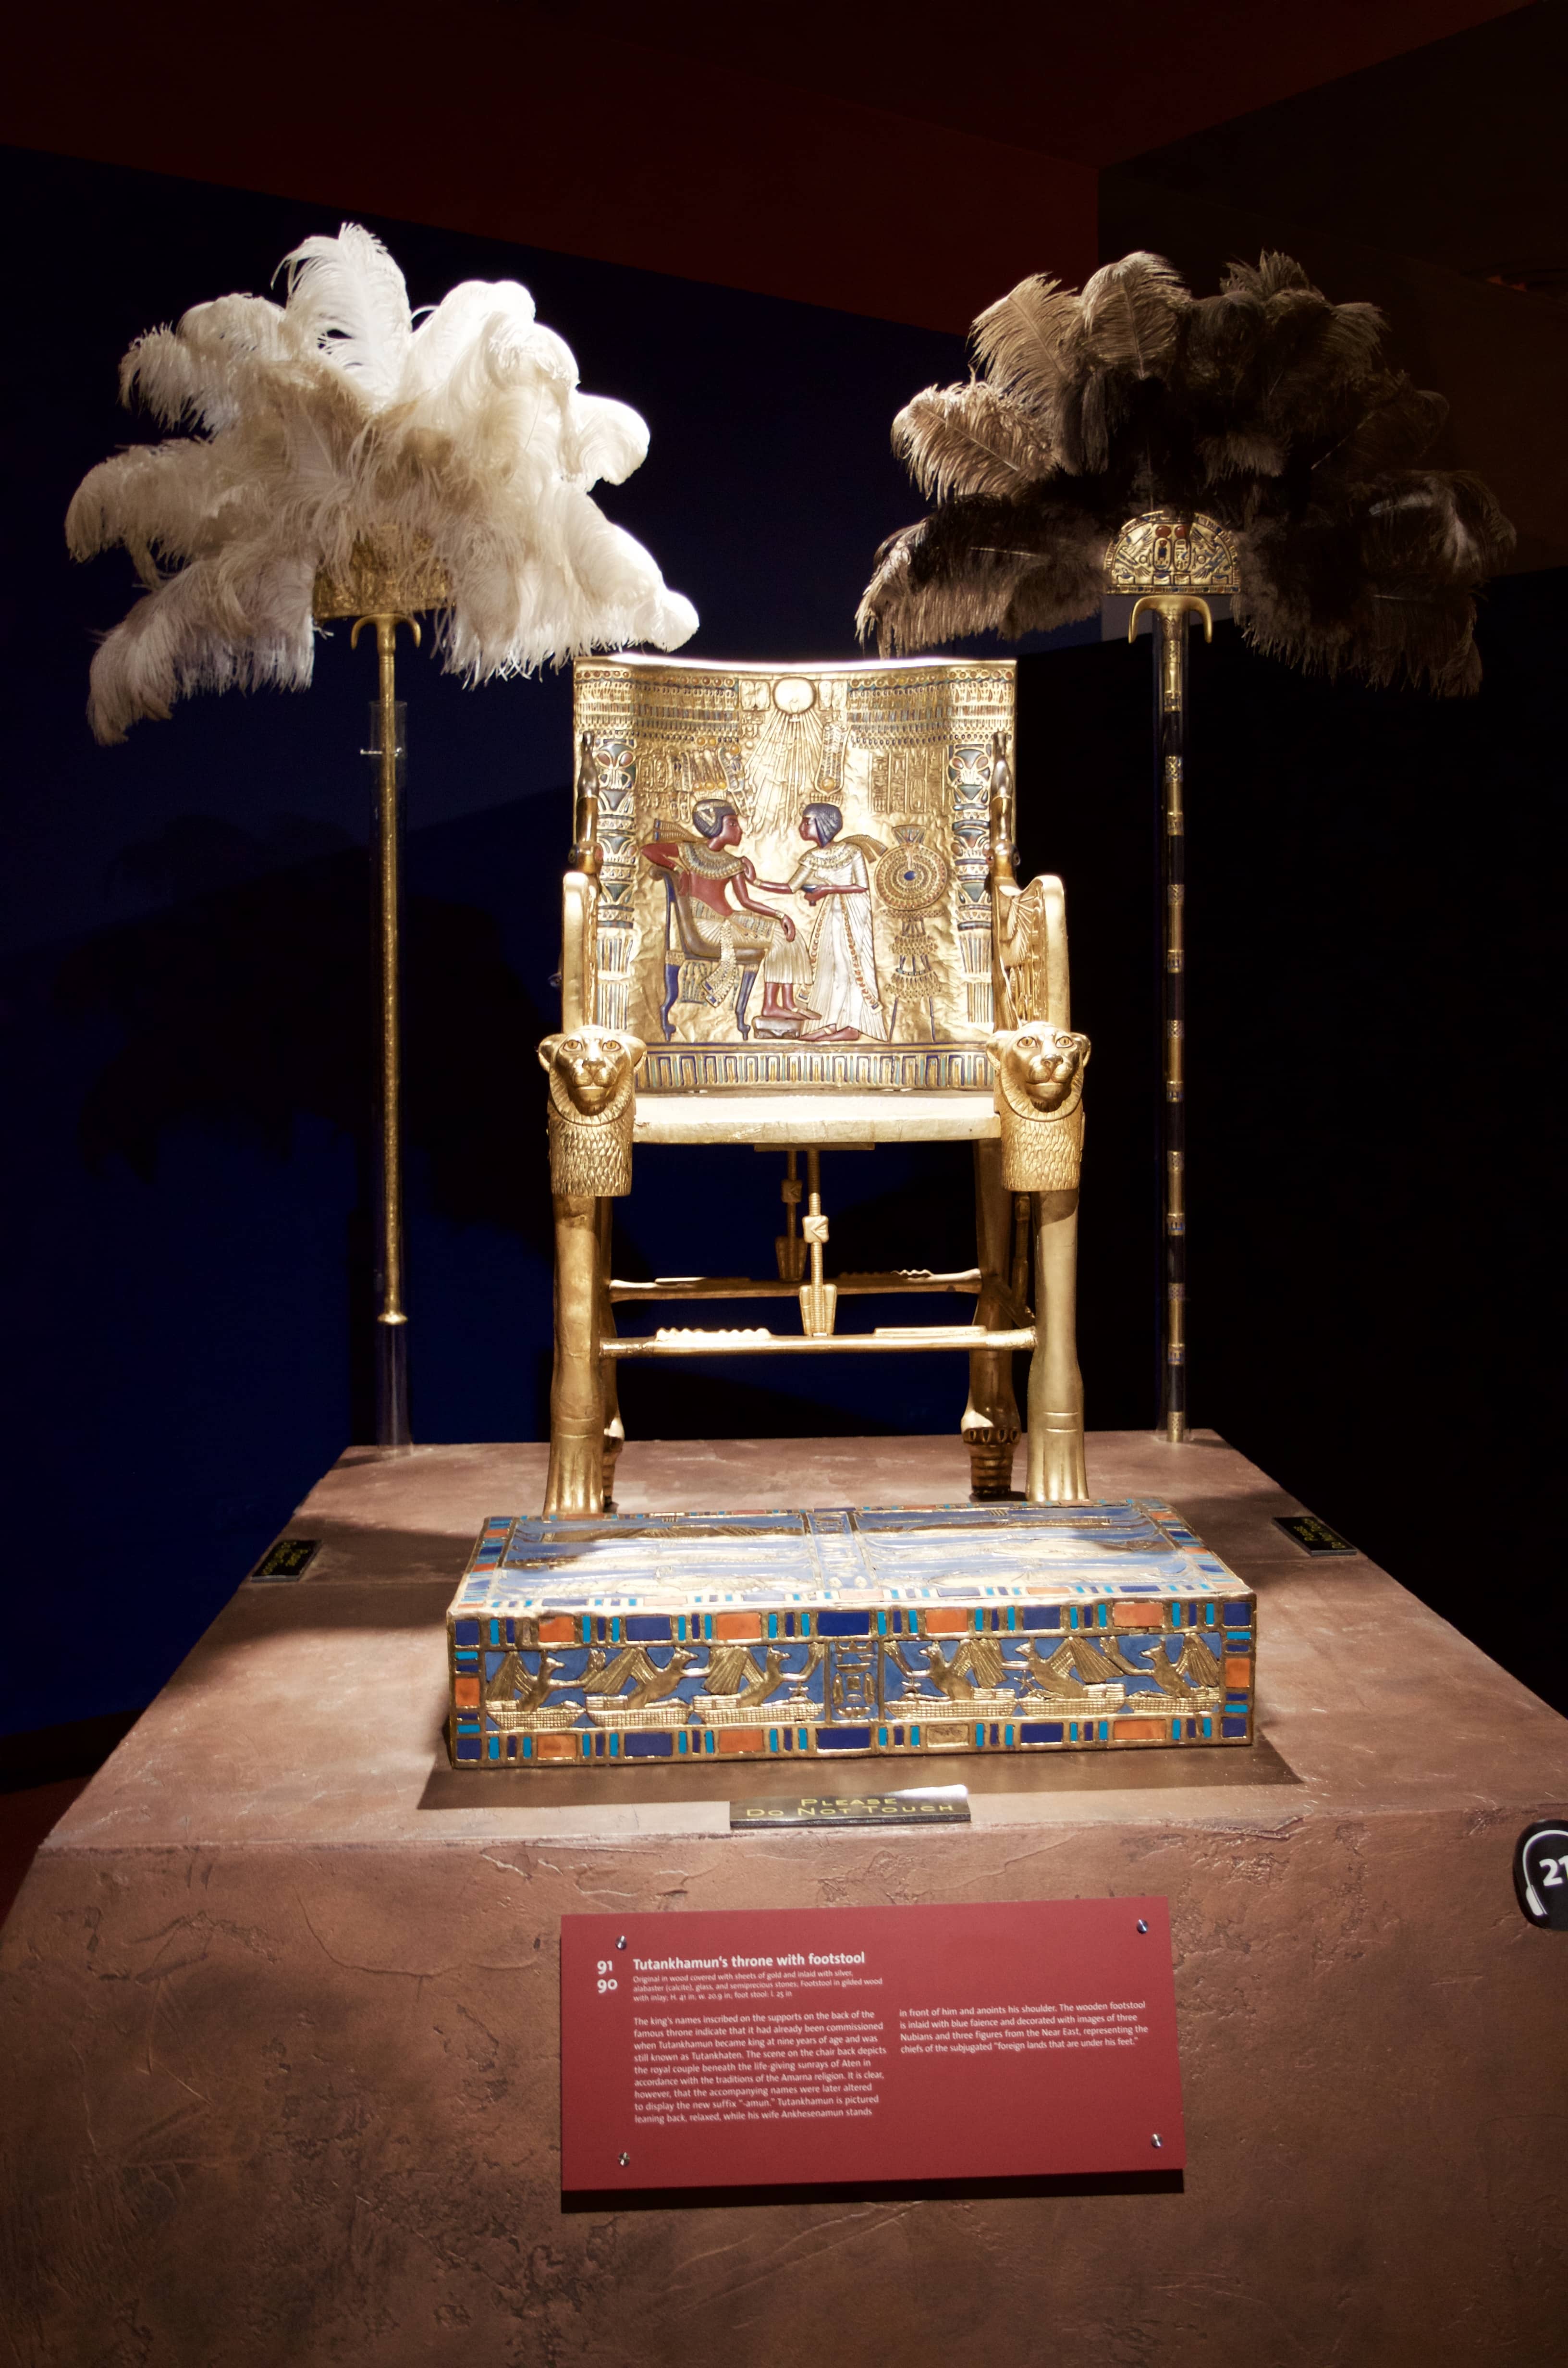 The Stunning King Tut Exhibit at the Putnam Museum